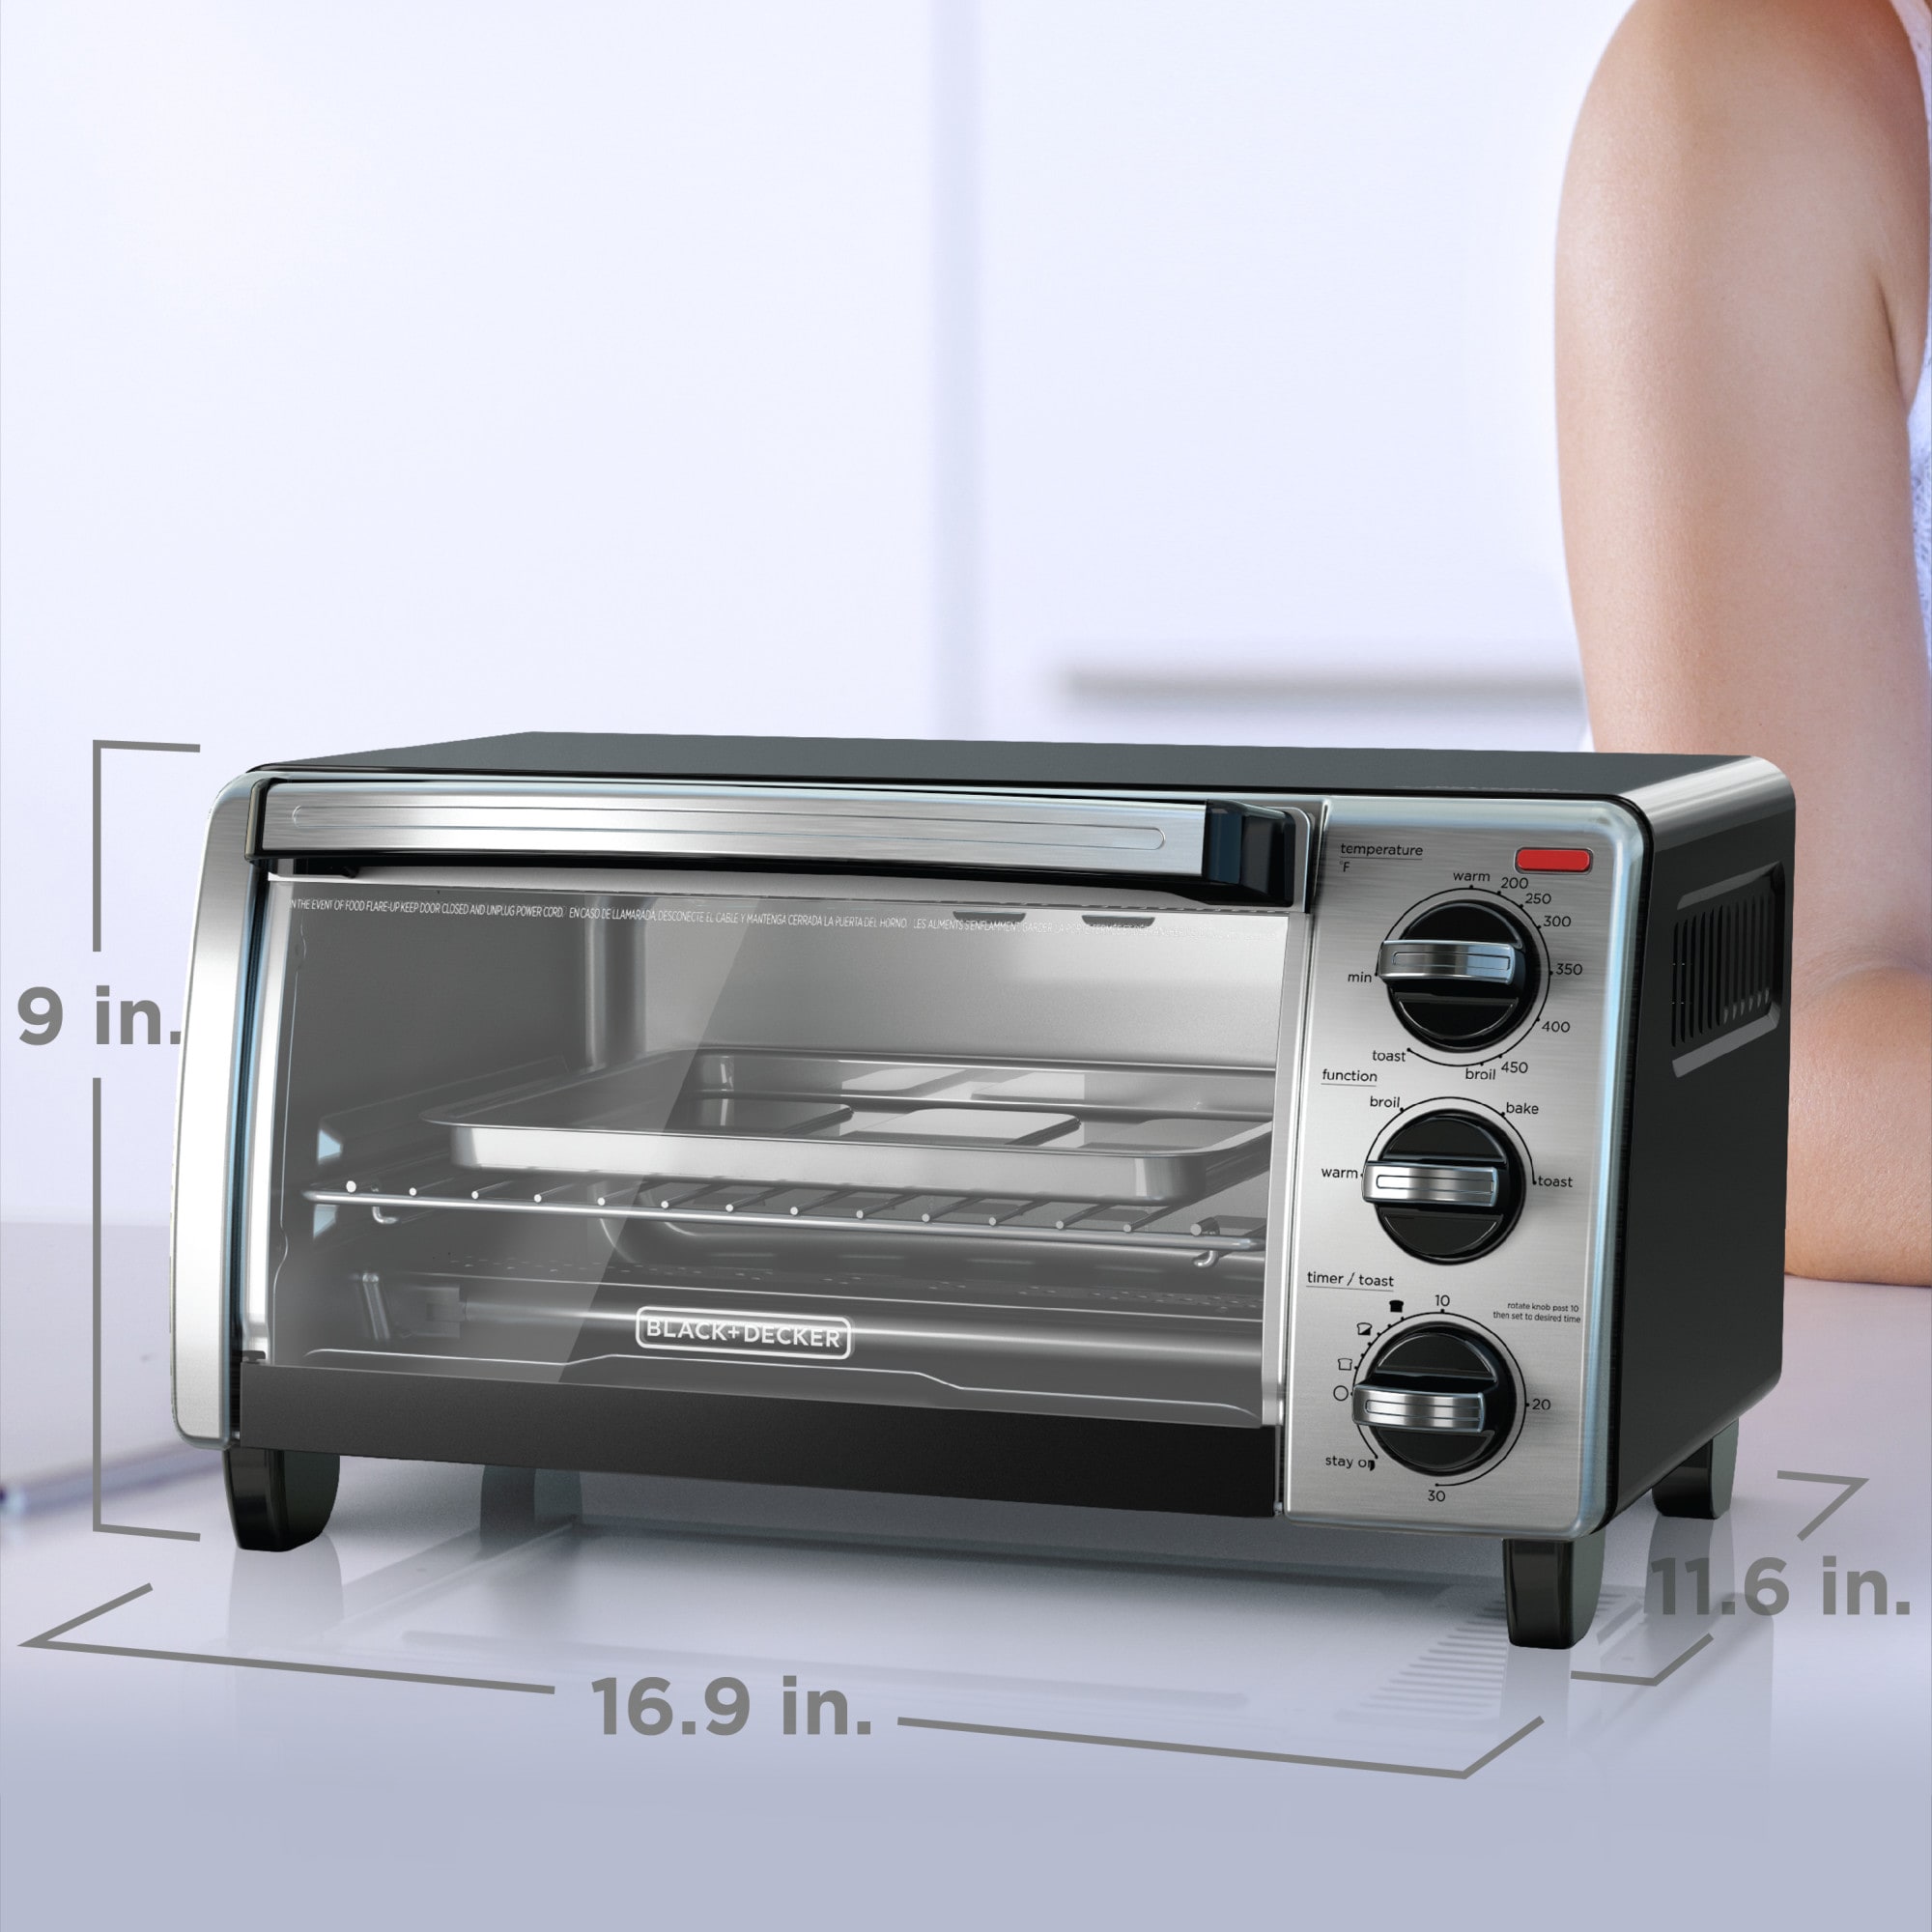 Black+Decker TRO480BS Toaster Oven, 1200 W, 4-Slice, Knob